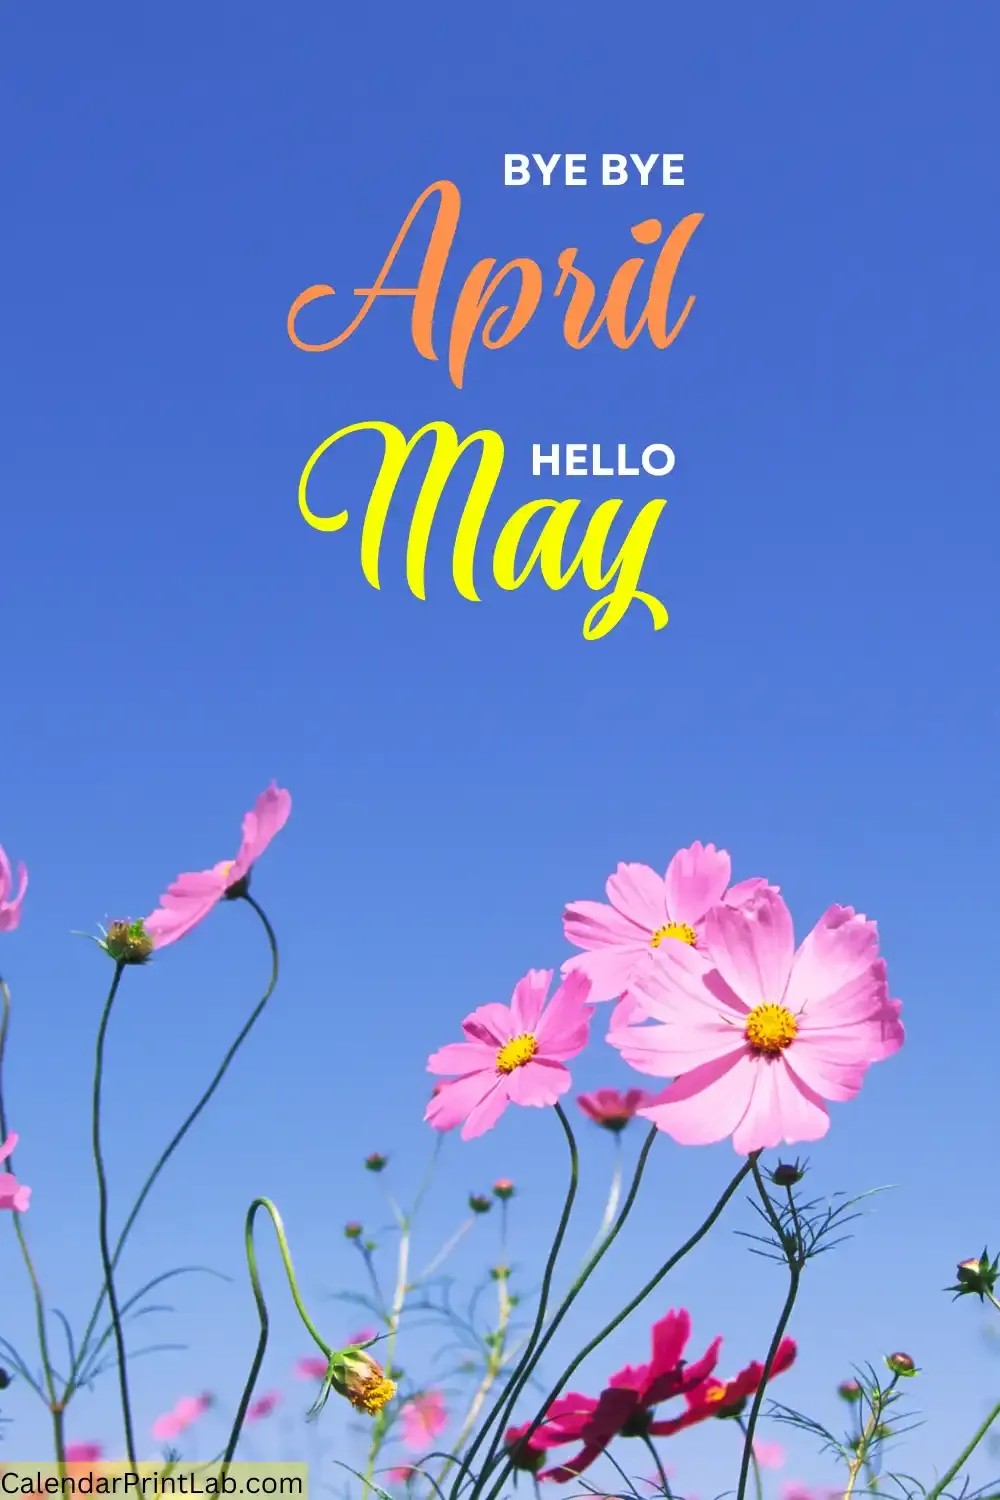 Bye April Hello May Image